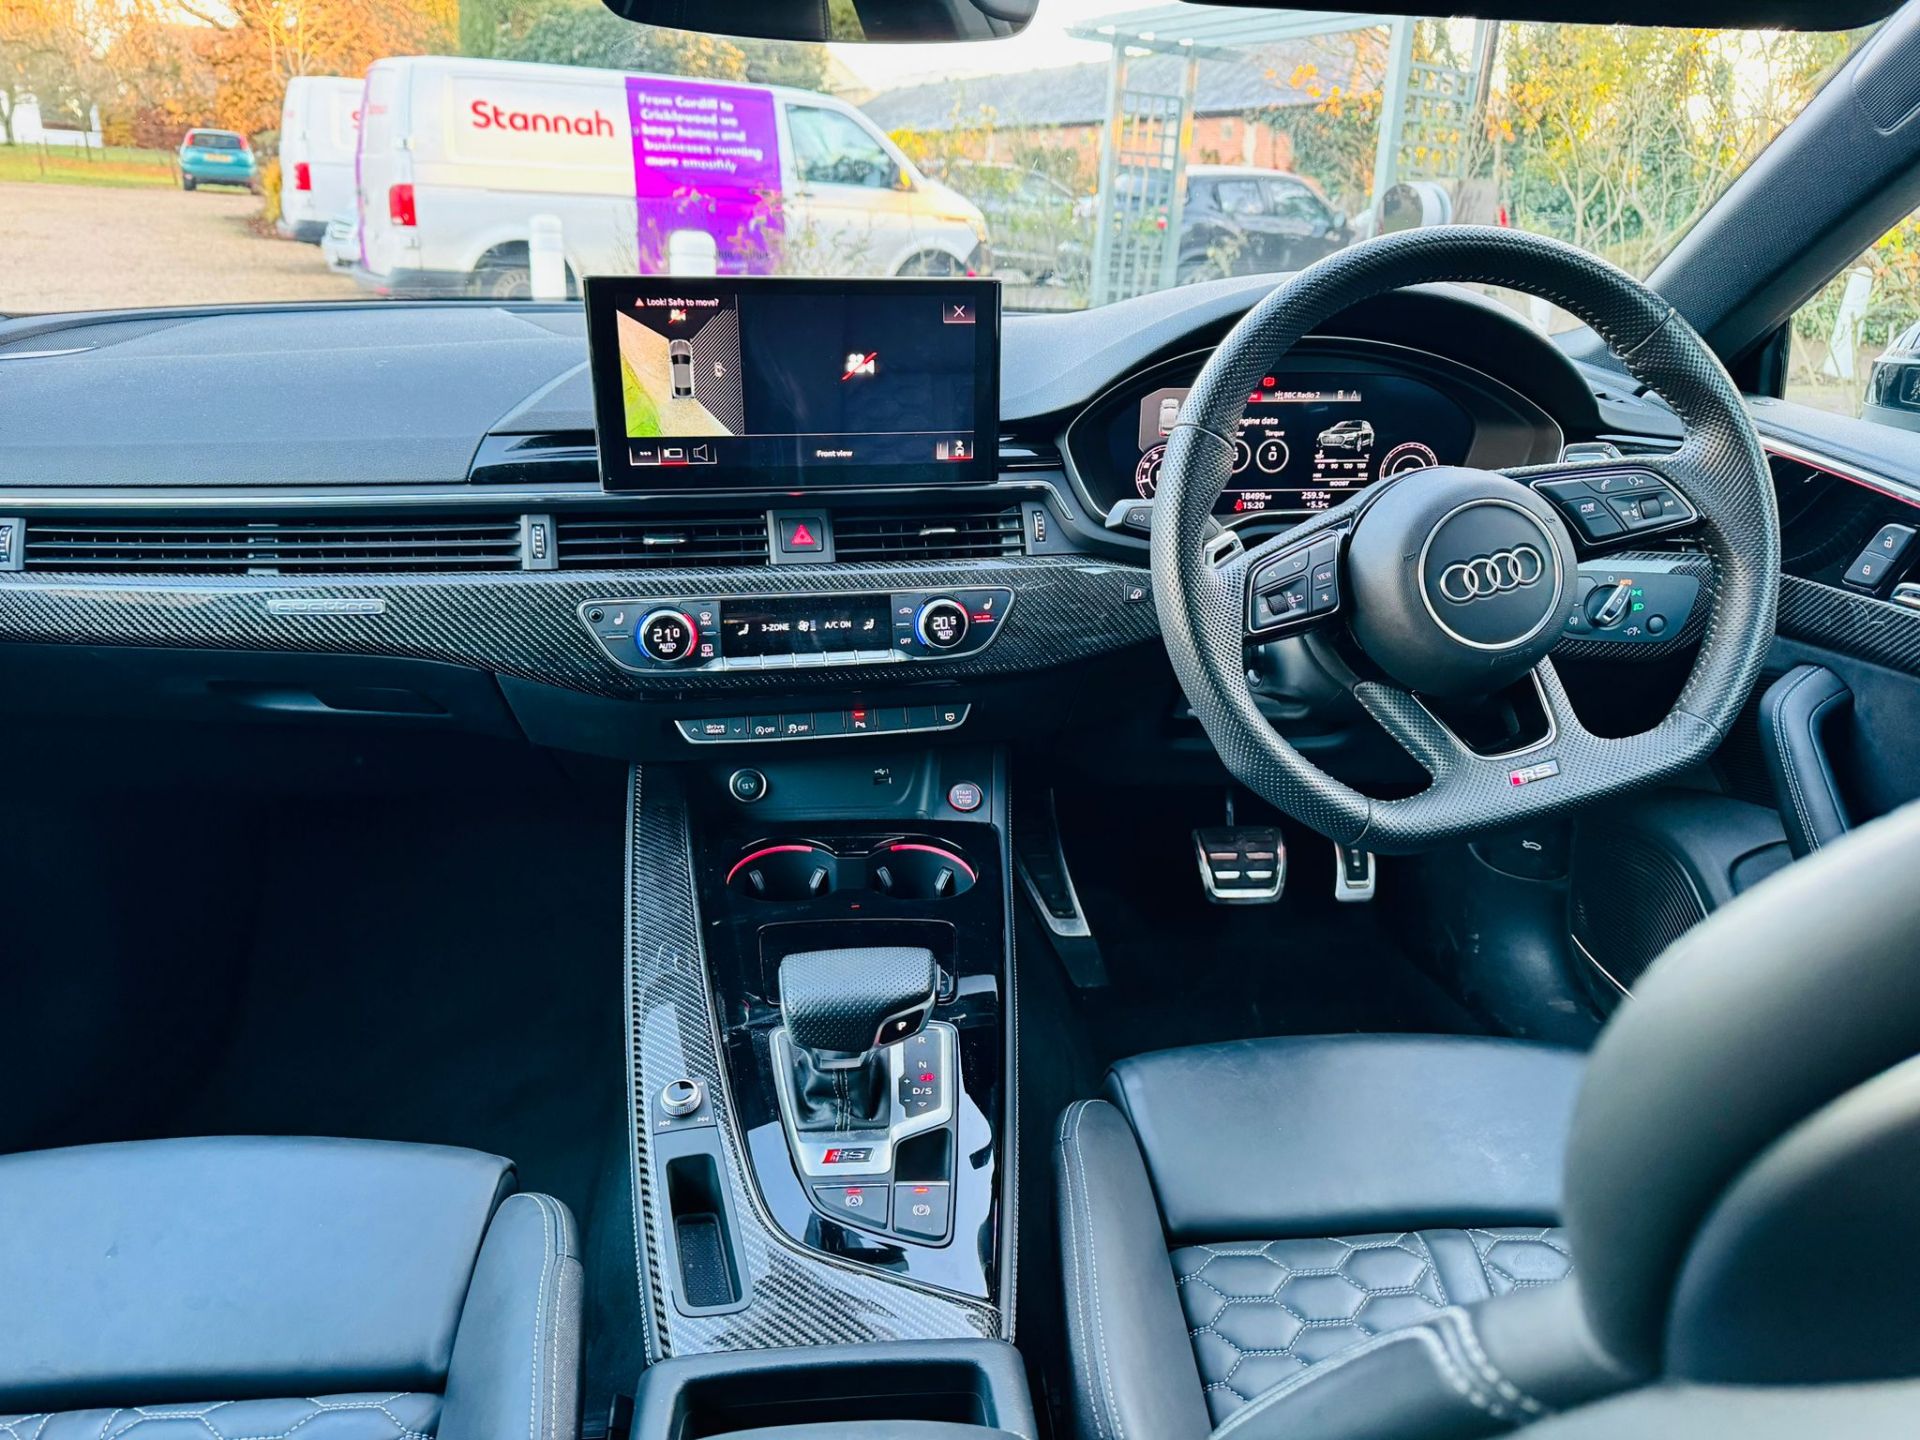 Audi RS5 TFSI "CARBON BLACK EDITION" QUATTRO (450BHP) 2021 21 Reg “HUGE SPEC” 1 OWNER 18K MILES - Image 12 of 36